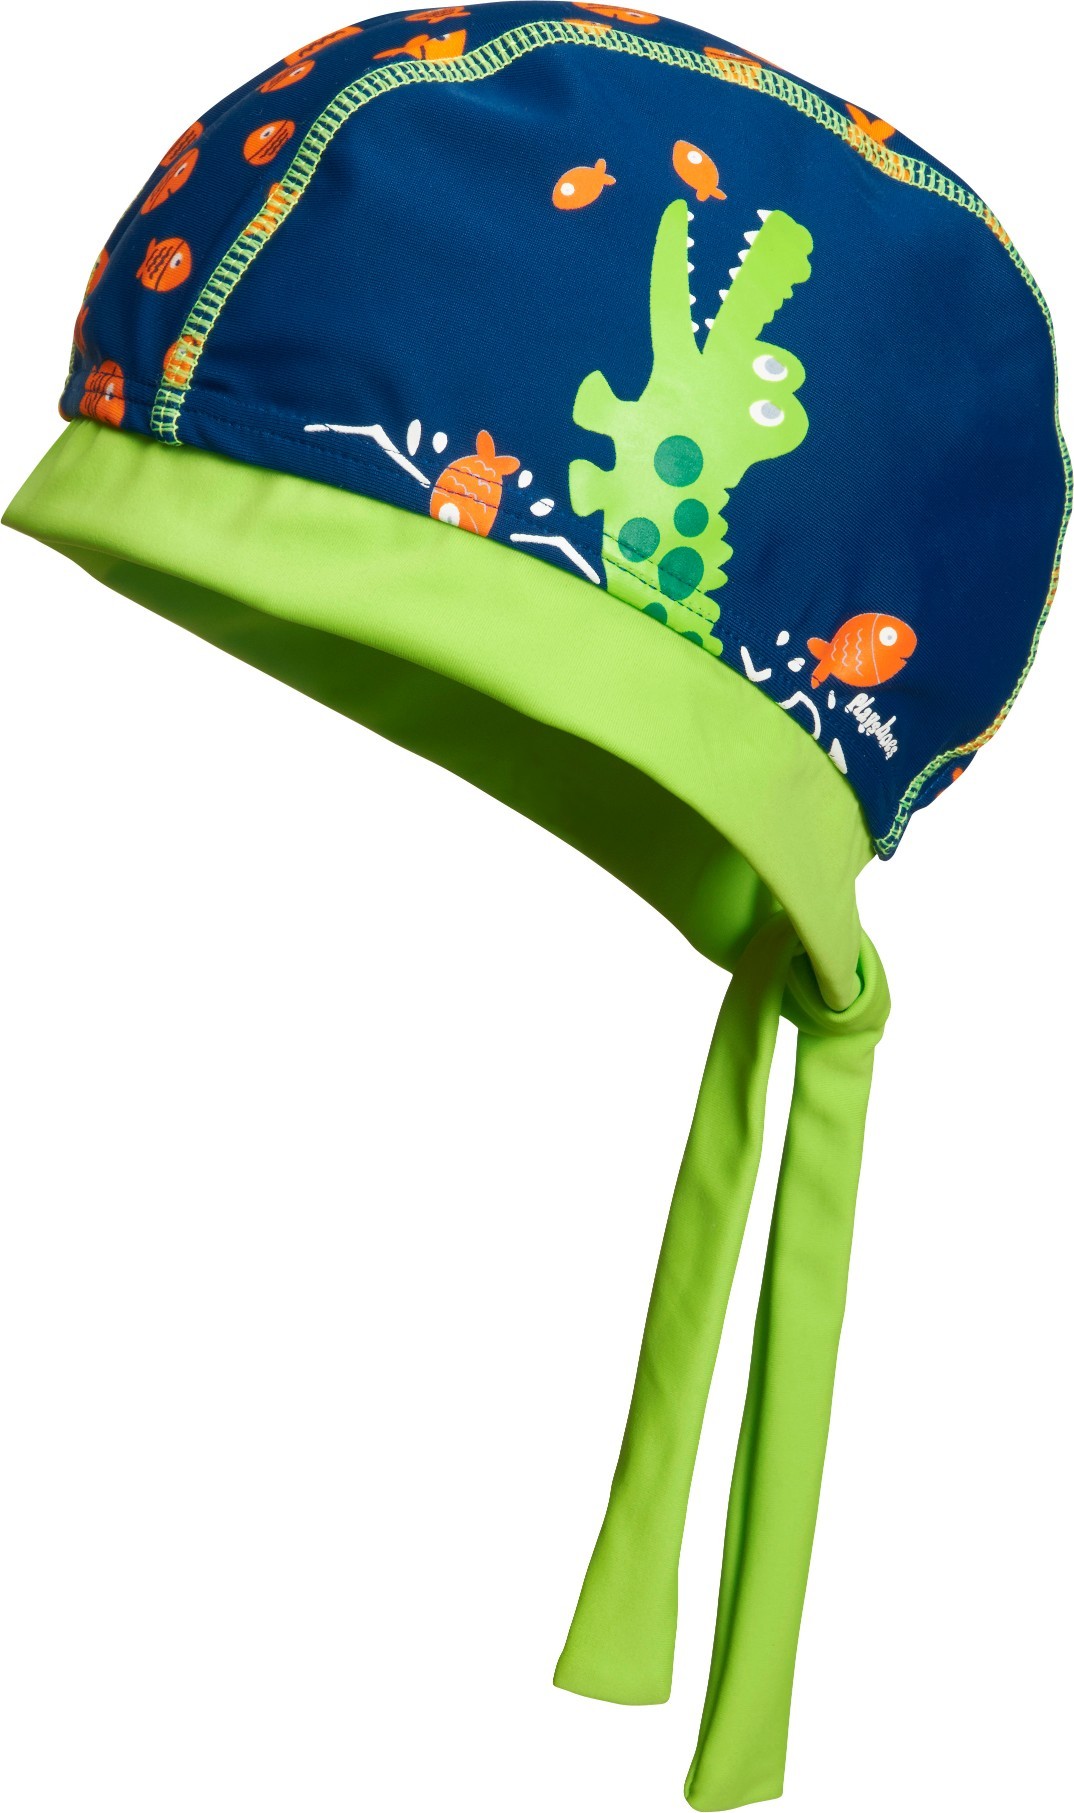 Playshoes - UV swim bandana for boys - Crocodile - Blue / green